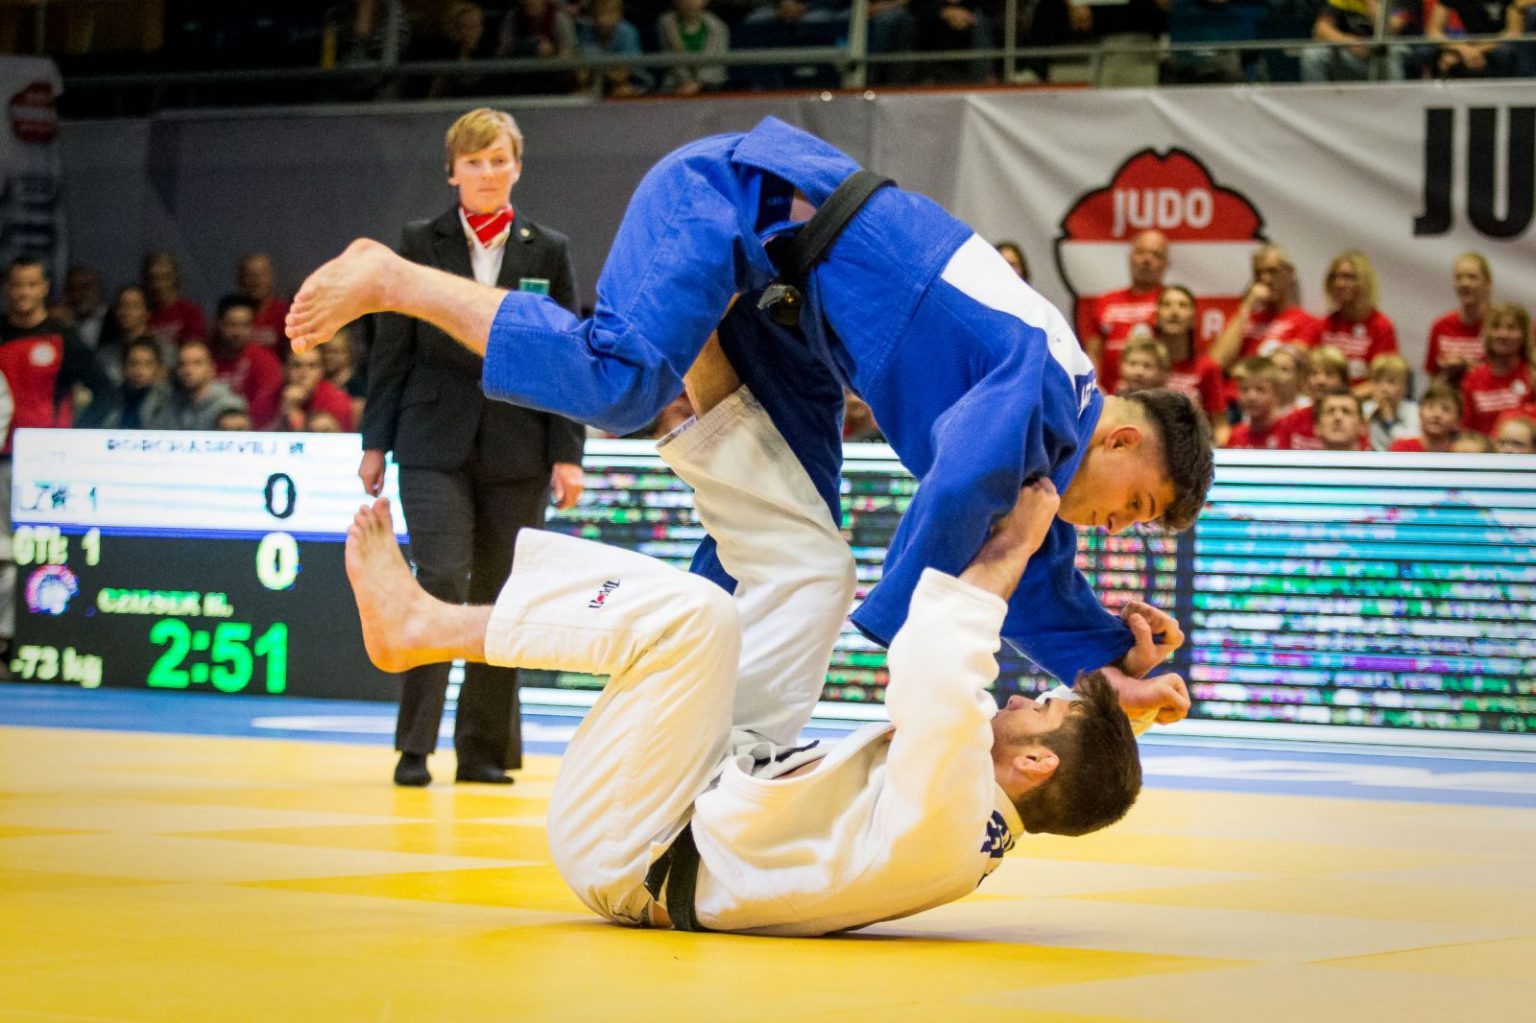 Judo-Bundesliga wird abgesagt!